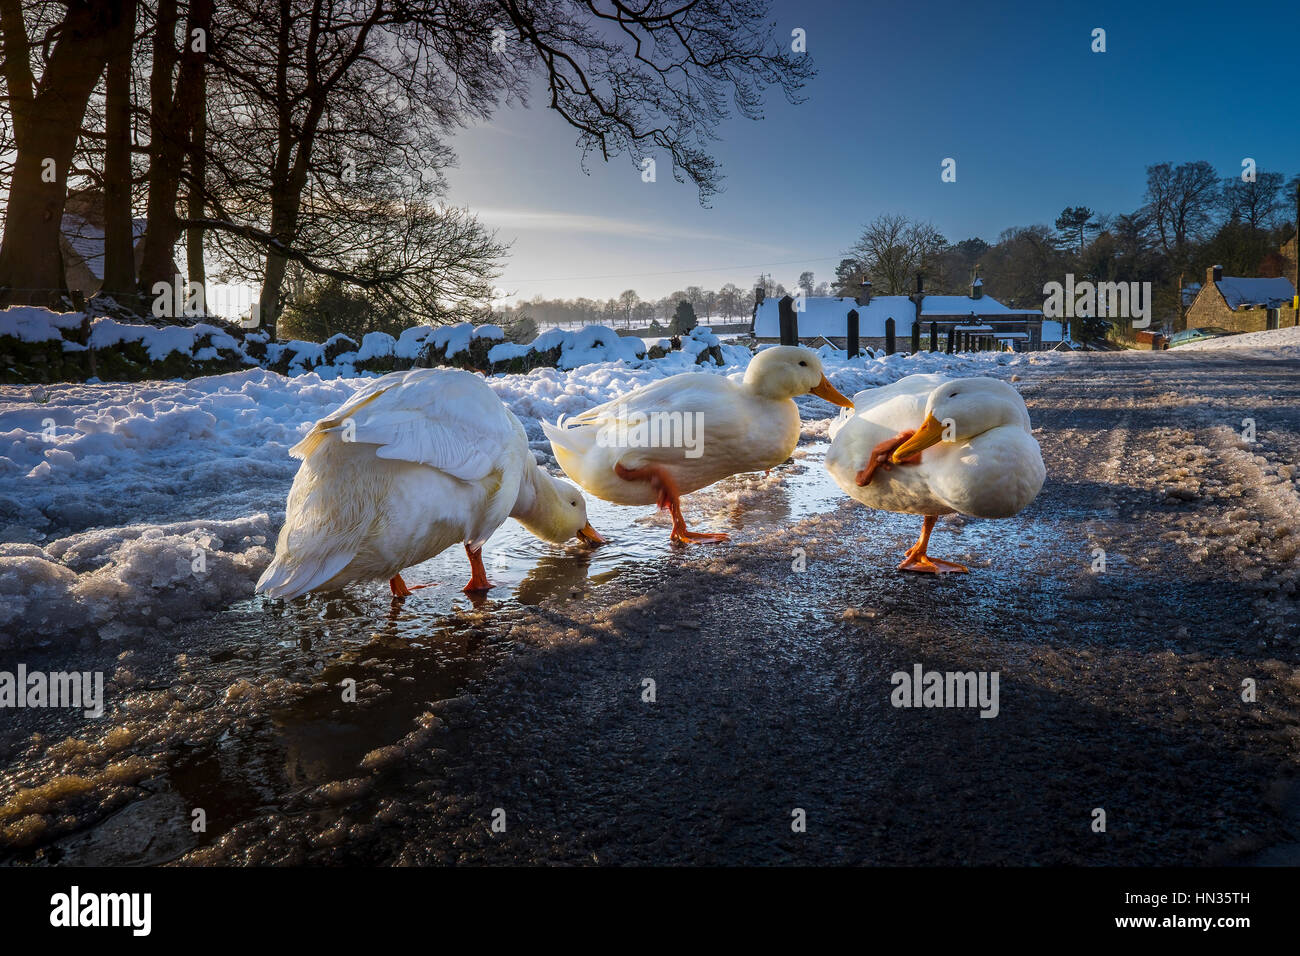 Aylesbury ducks at Tissington in Derbyshire. Stock Photo